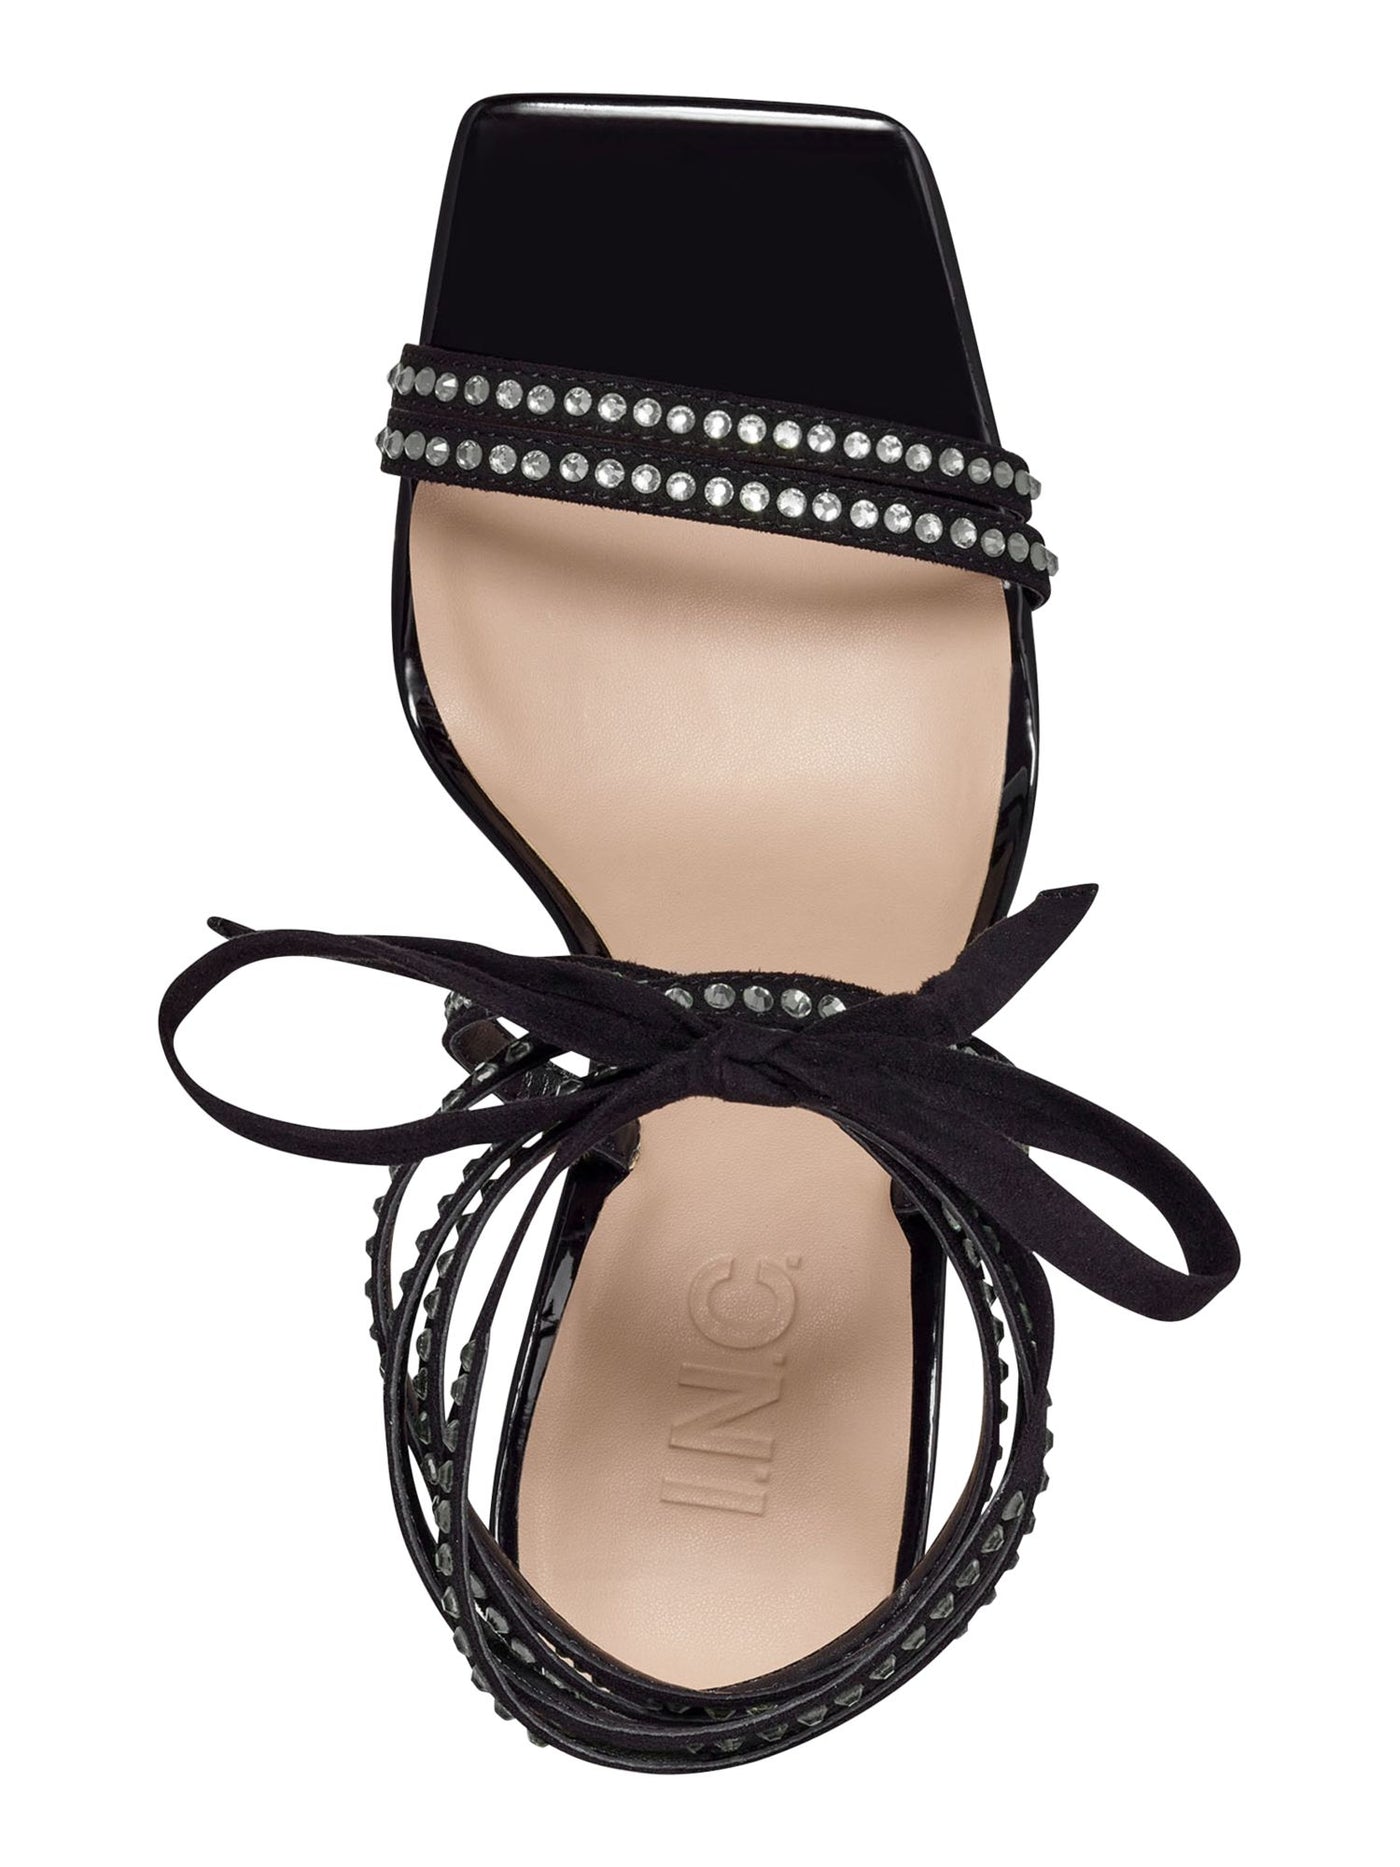 INC Womens Black Rhinestone Bradki Open Toe Sculpted Heel Lace-Up Dress Sandals Shoes 6 M